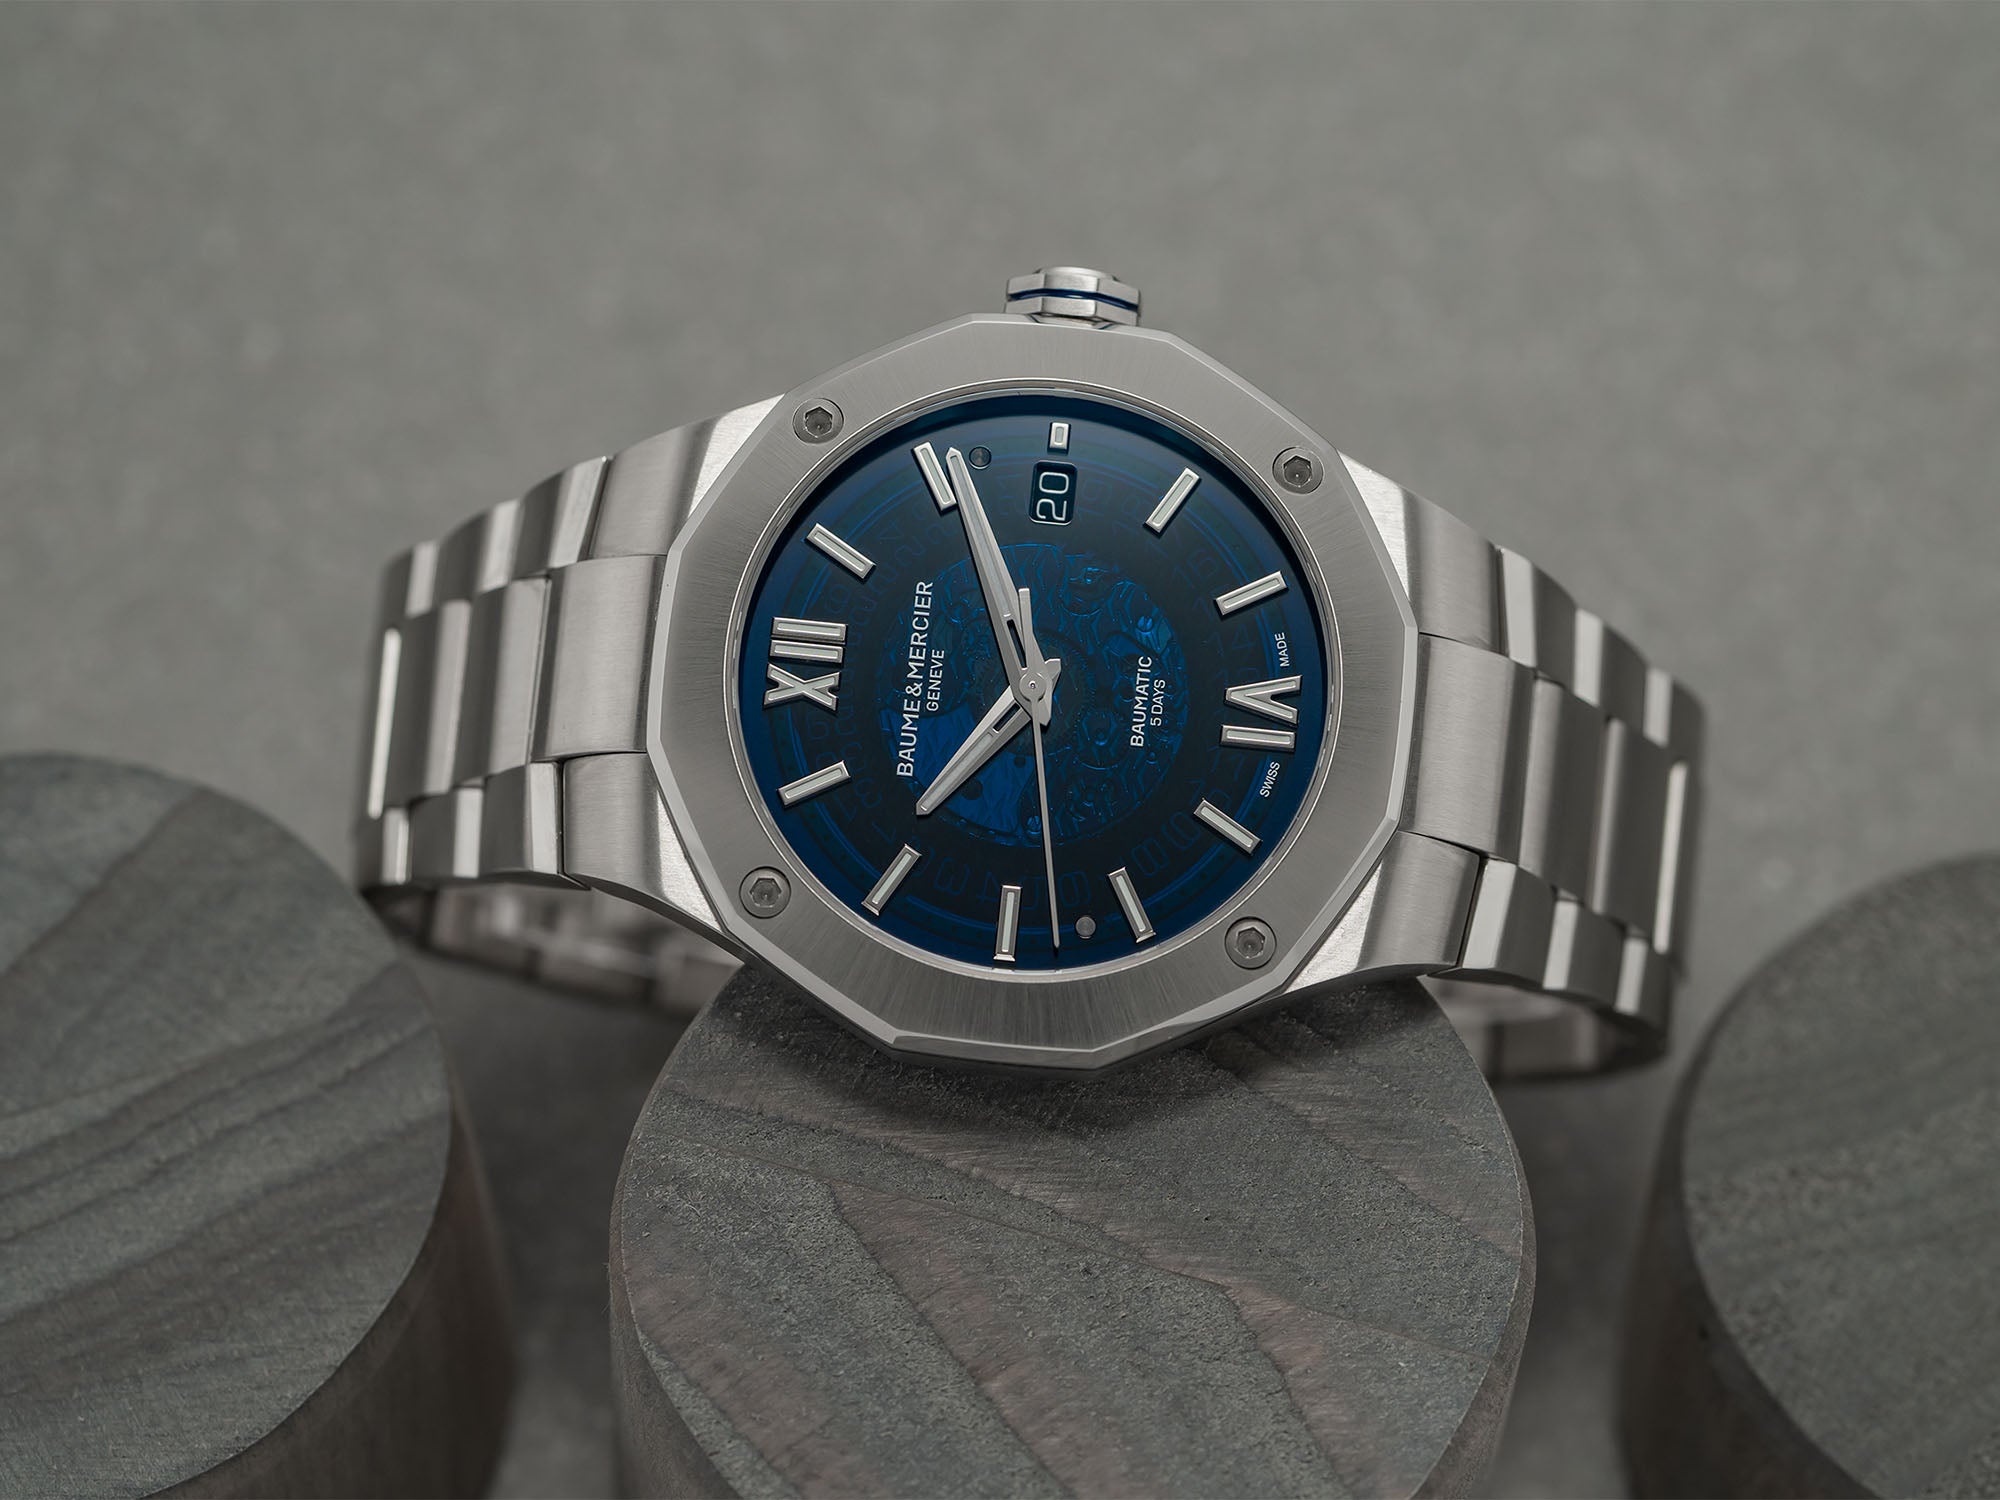 luxury watch brand